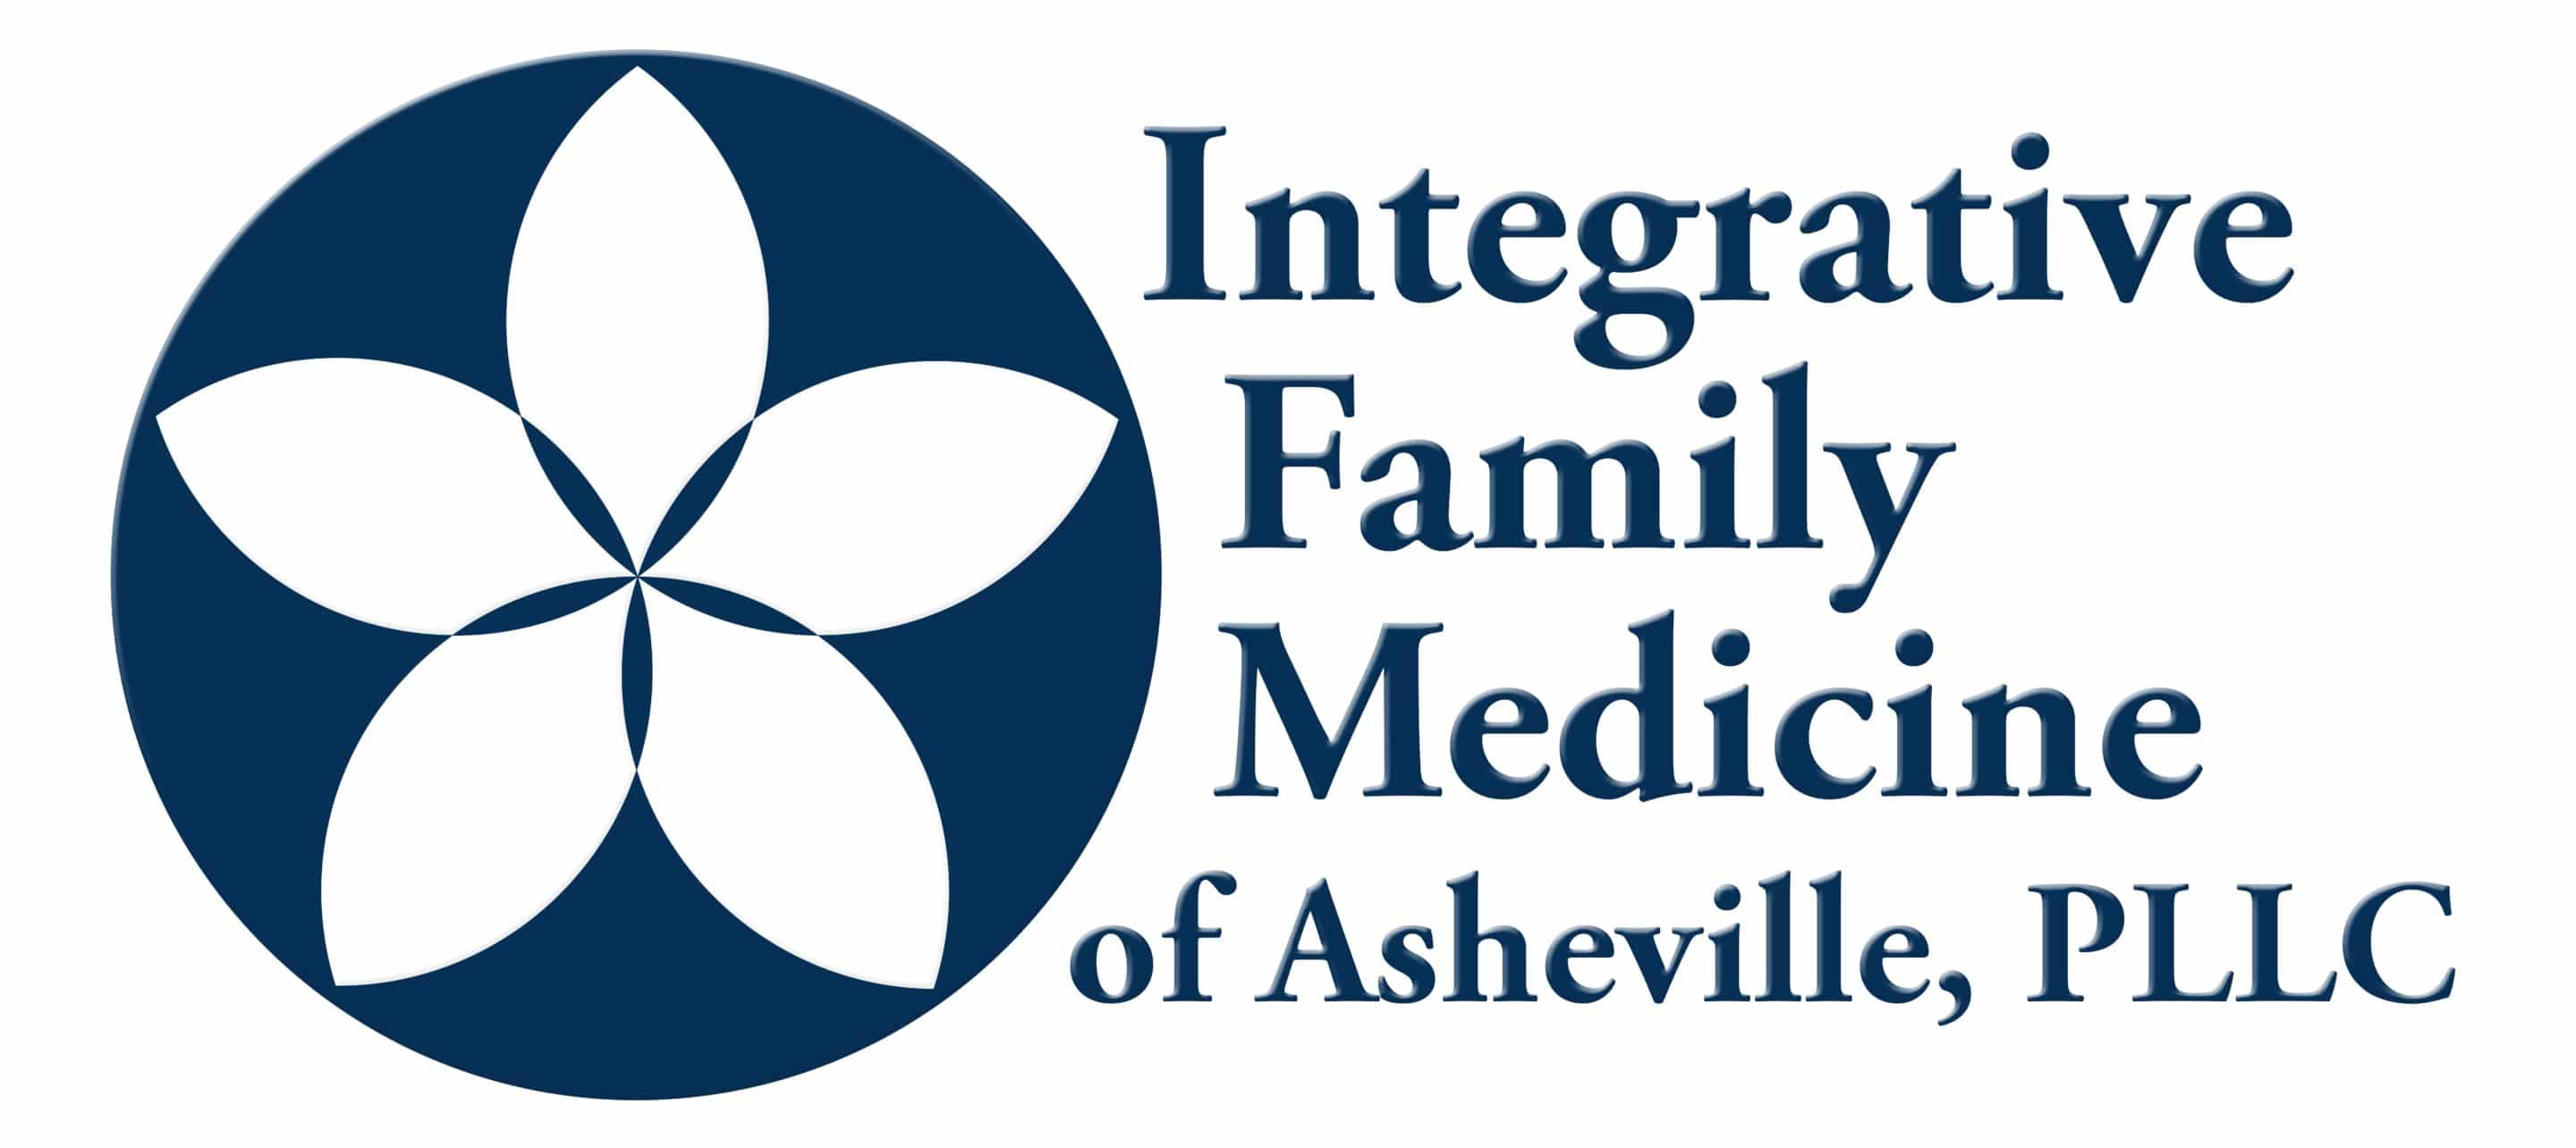 Integrative Family Medicine of Asheville